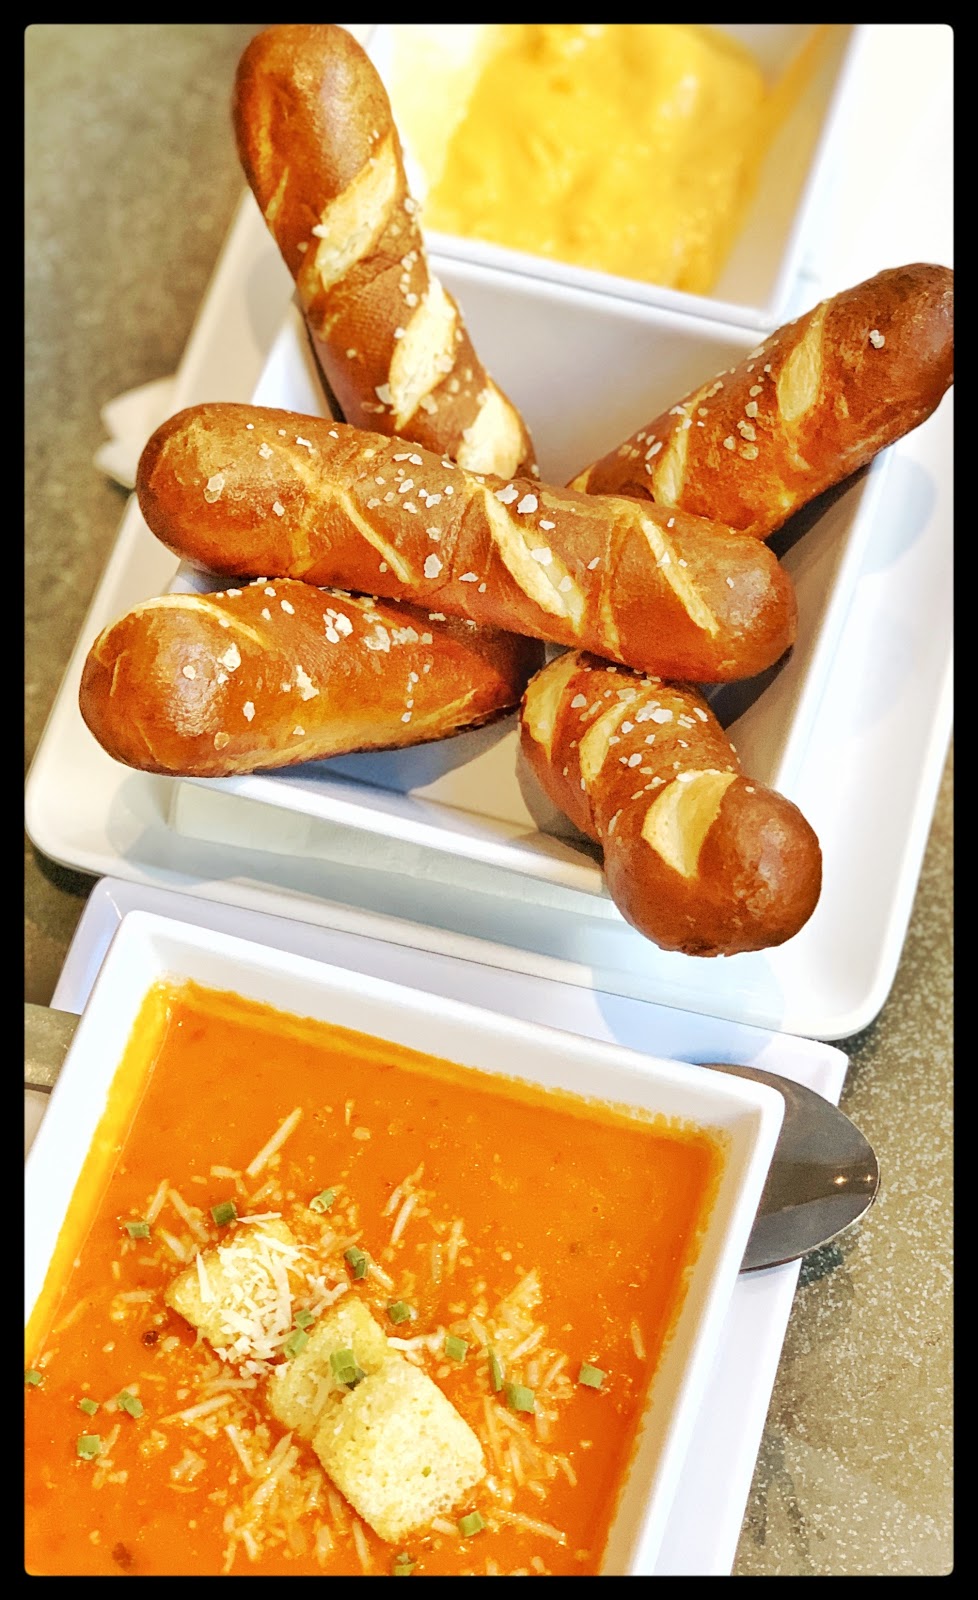 Picture of Pretzel breadsticks and Tomato Bisque Soup